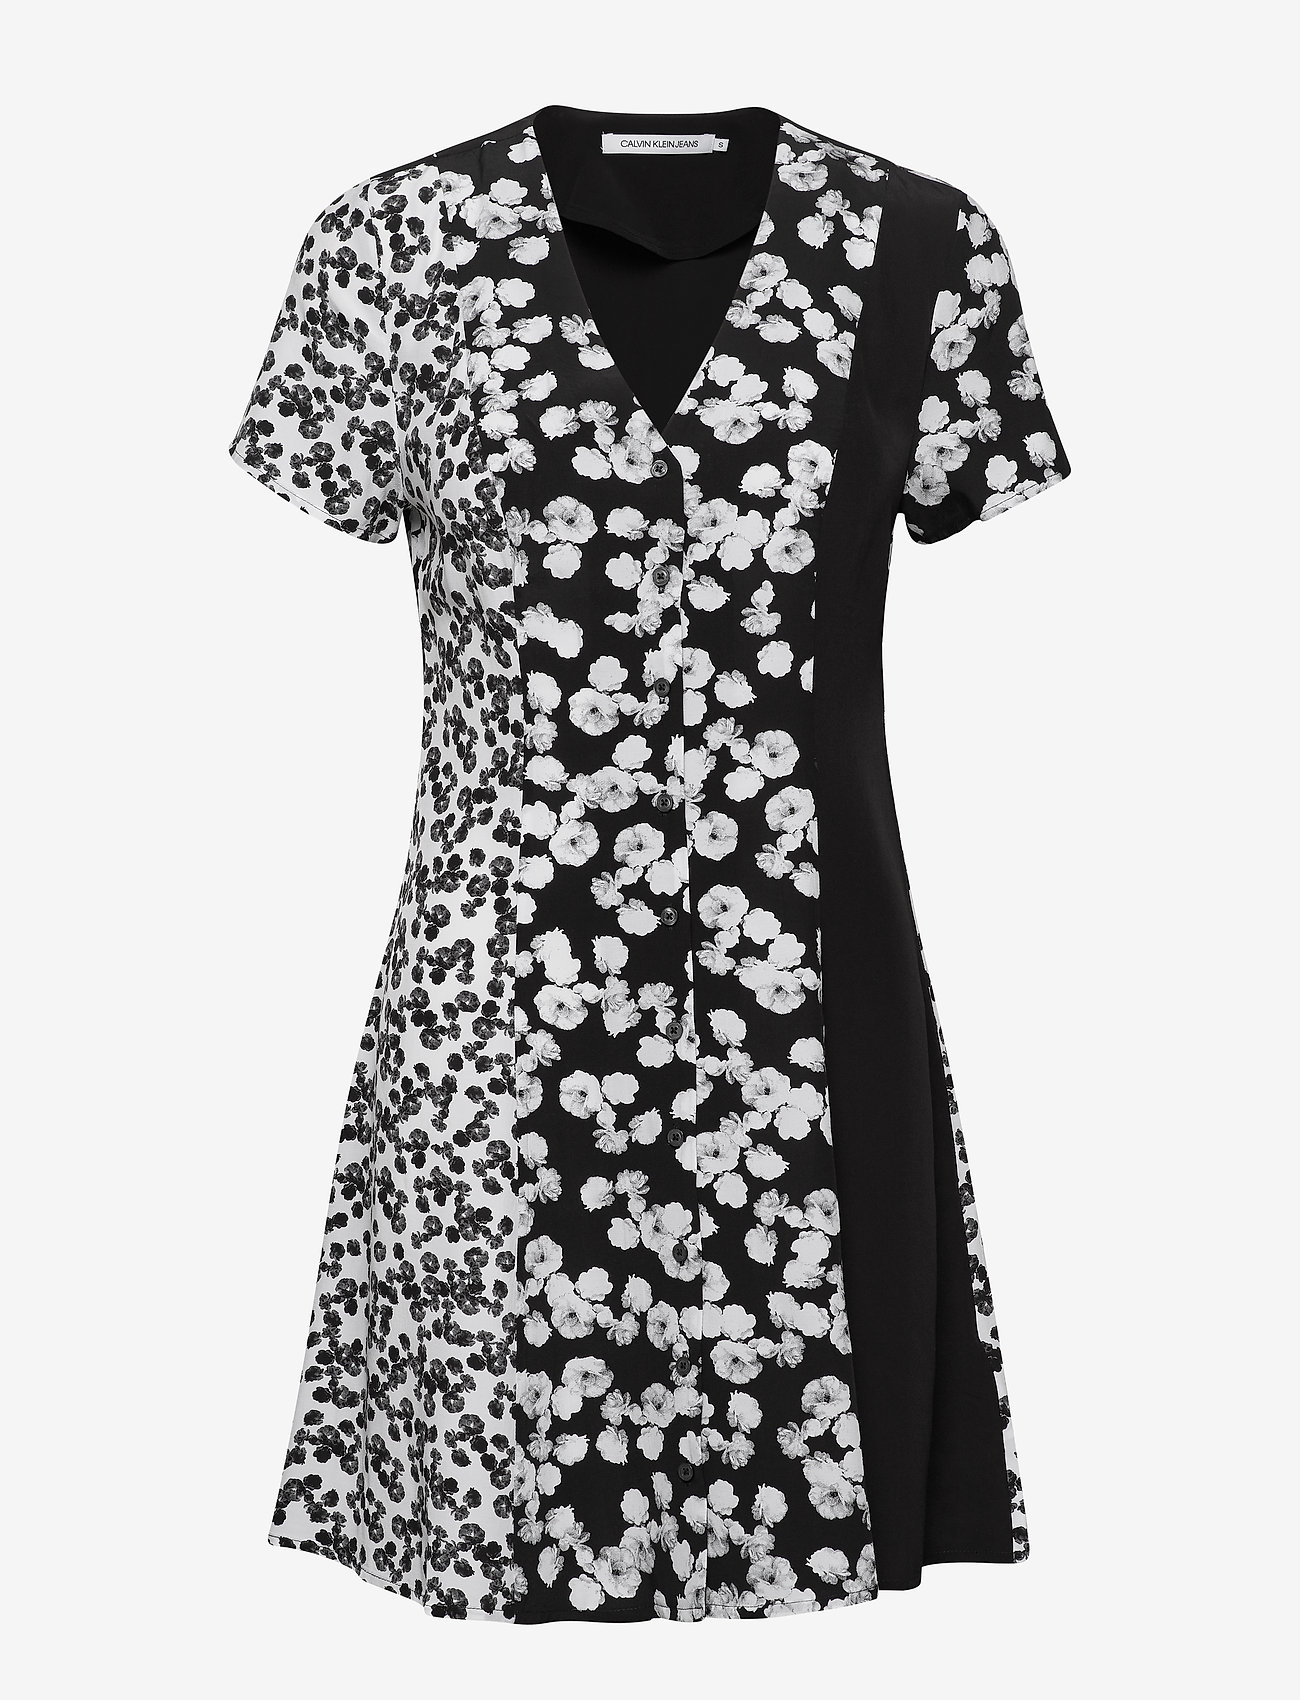 calvin klein black and white dress